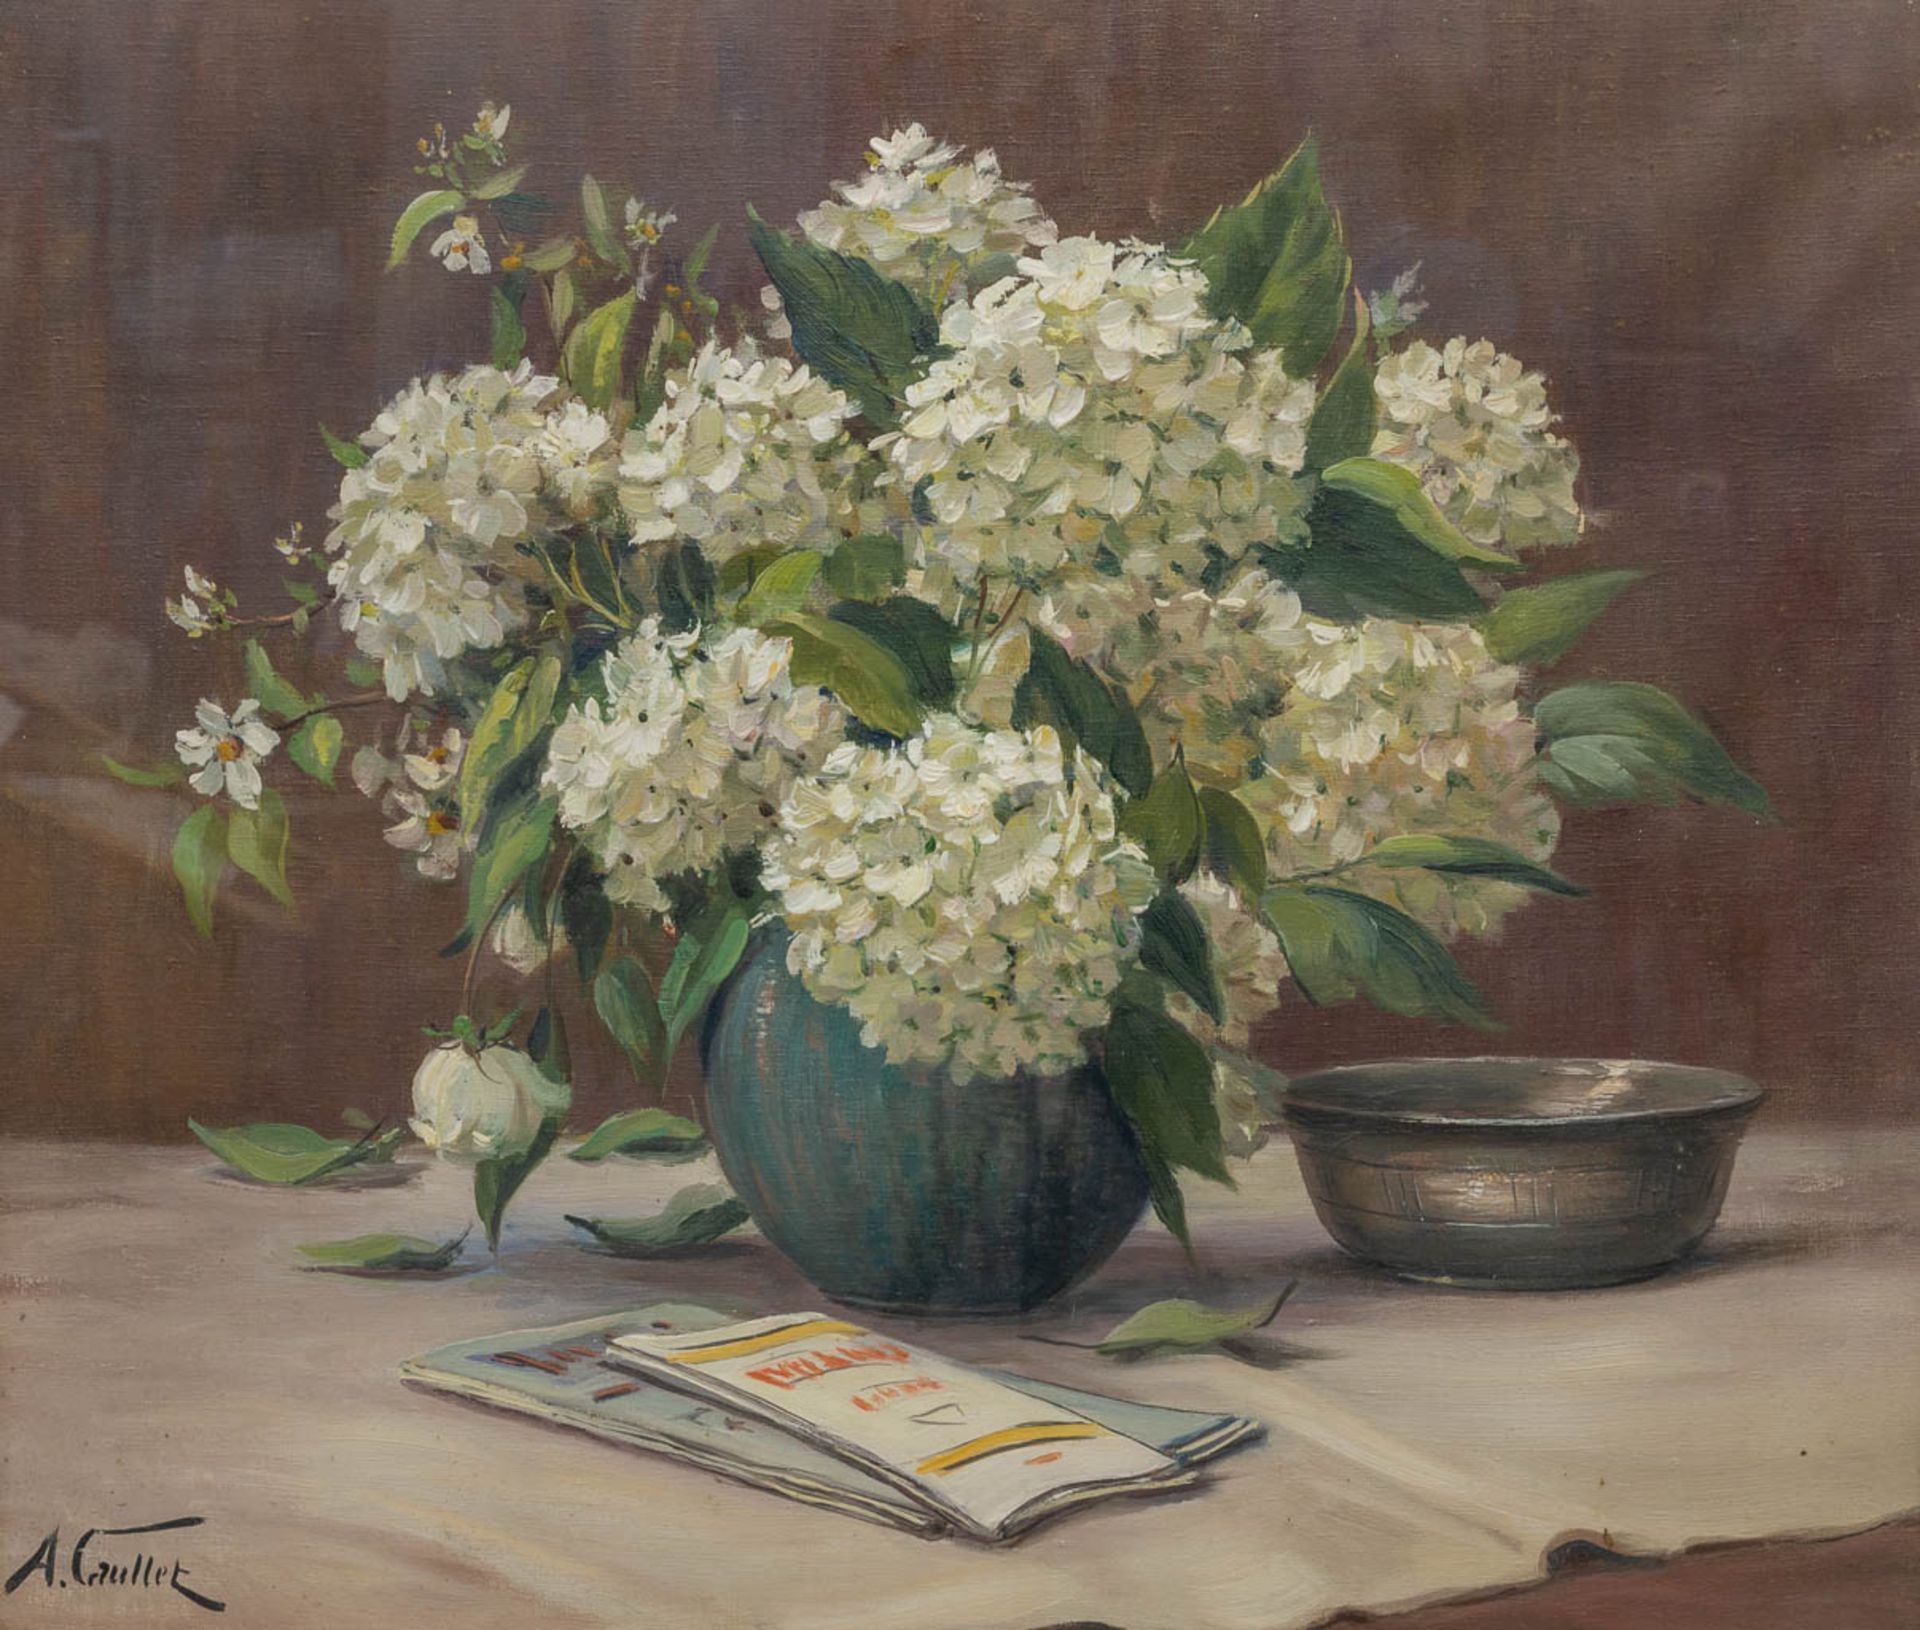 Albert CAULLET (1875-1950) still life with flowers, oil on canvas. (67 x 57 cm)